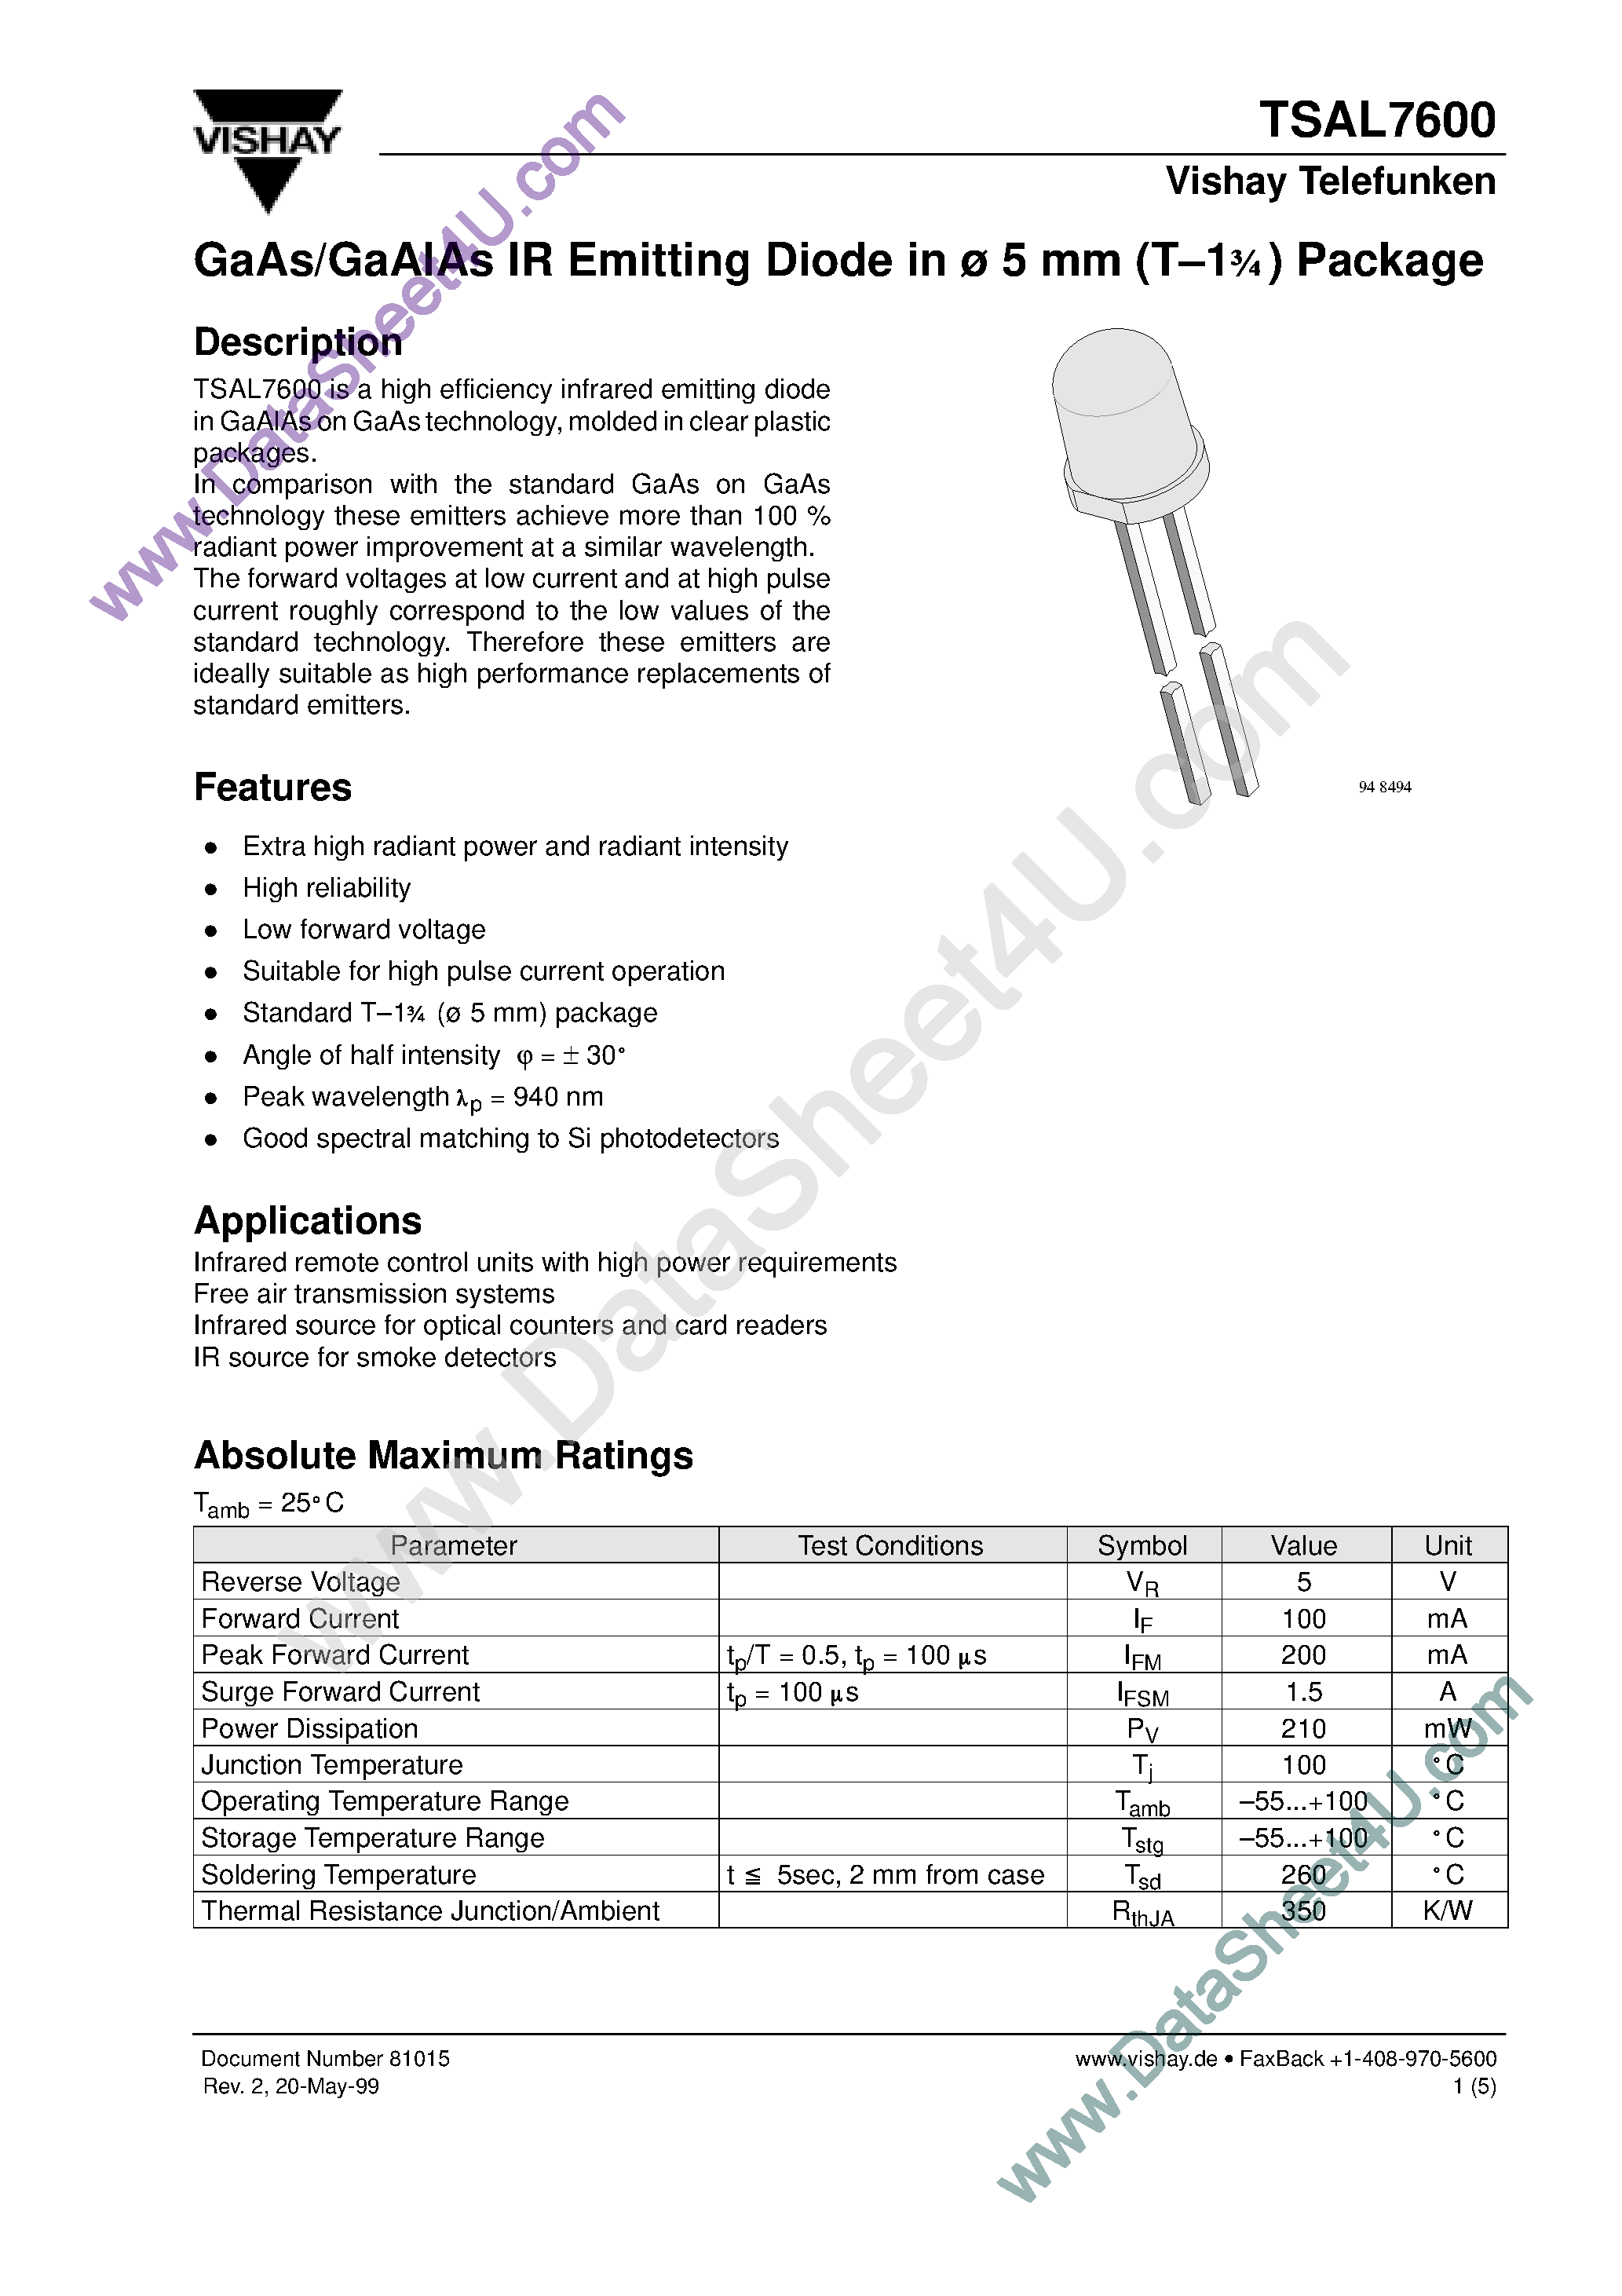 Datasheet TSAL7600 - GaAs/GaAlAs IR Emitting Diode page 1